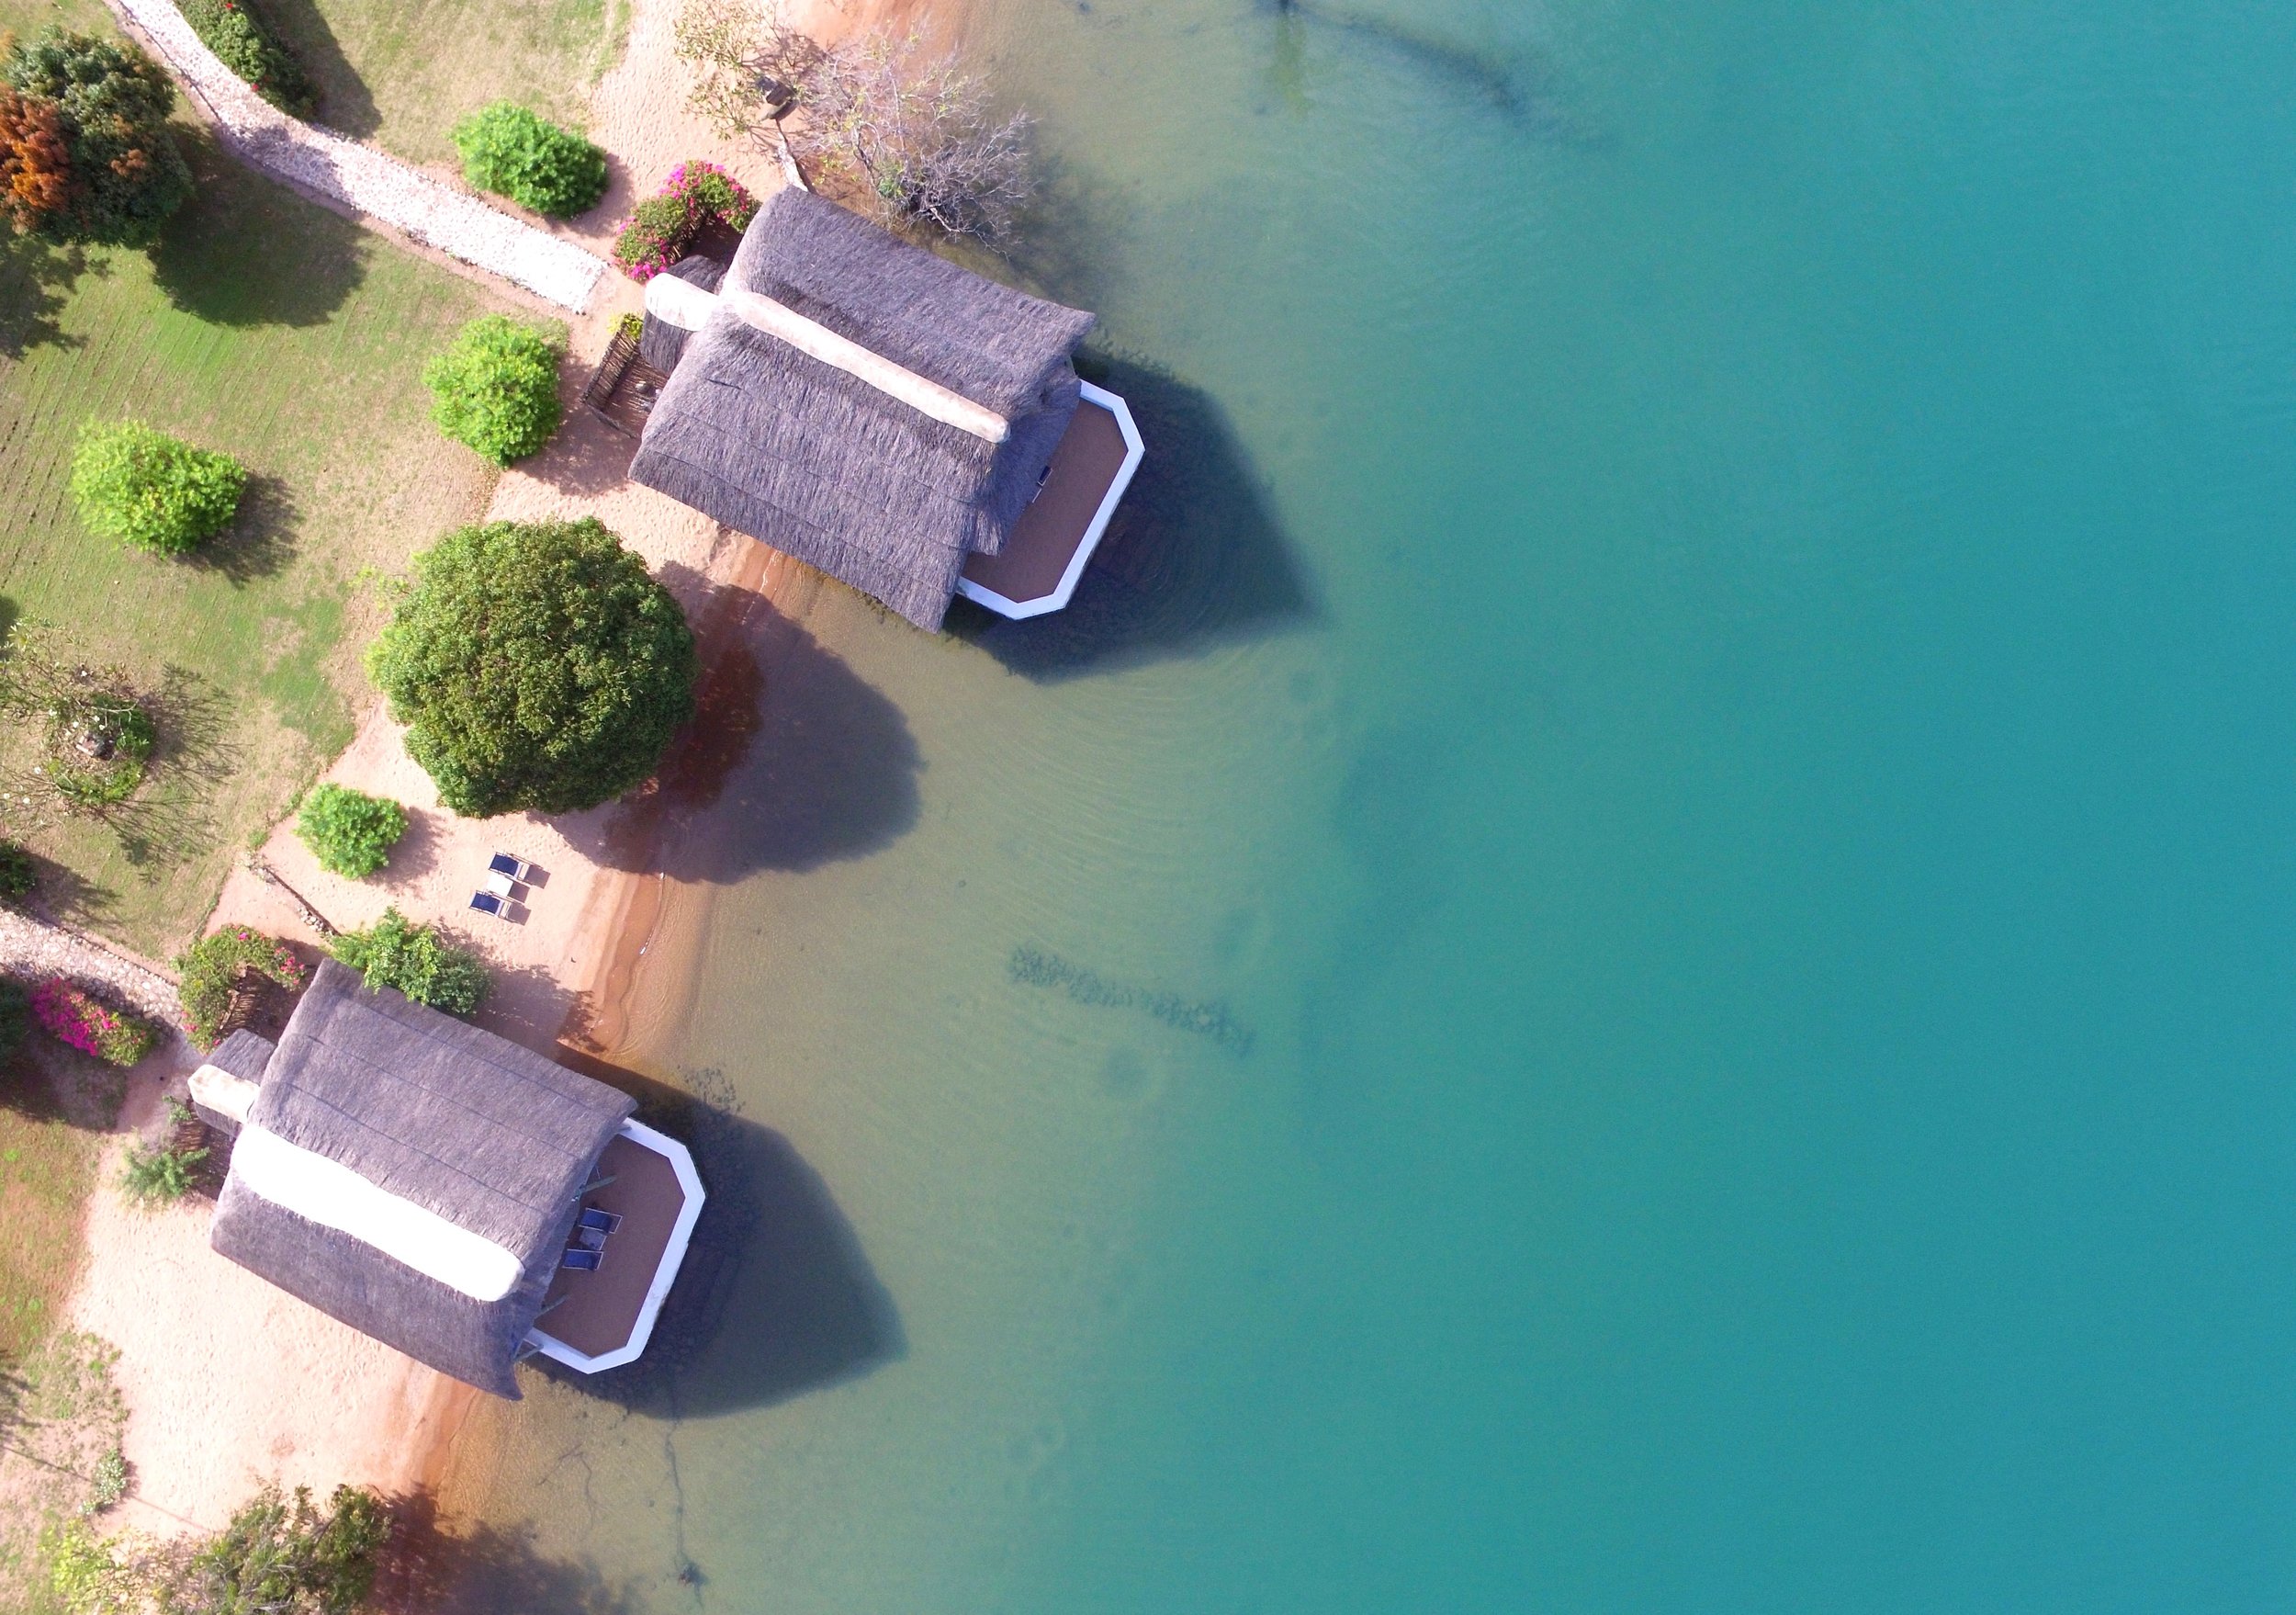 Lake Shore Lodge Tz - Lake Tanganyika - Chalet 1 and 2 for website 2022.jpeg